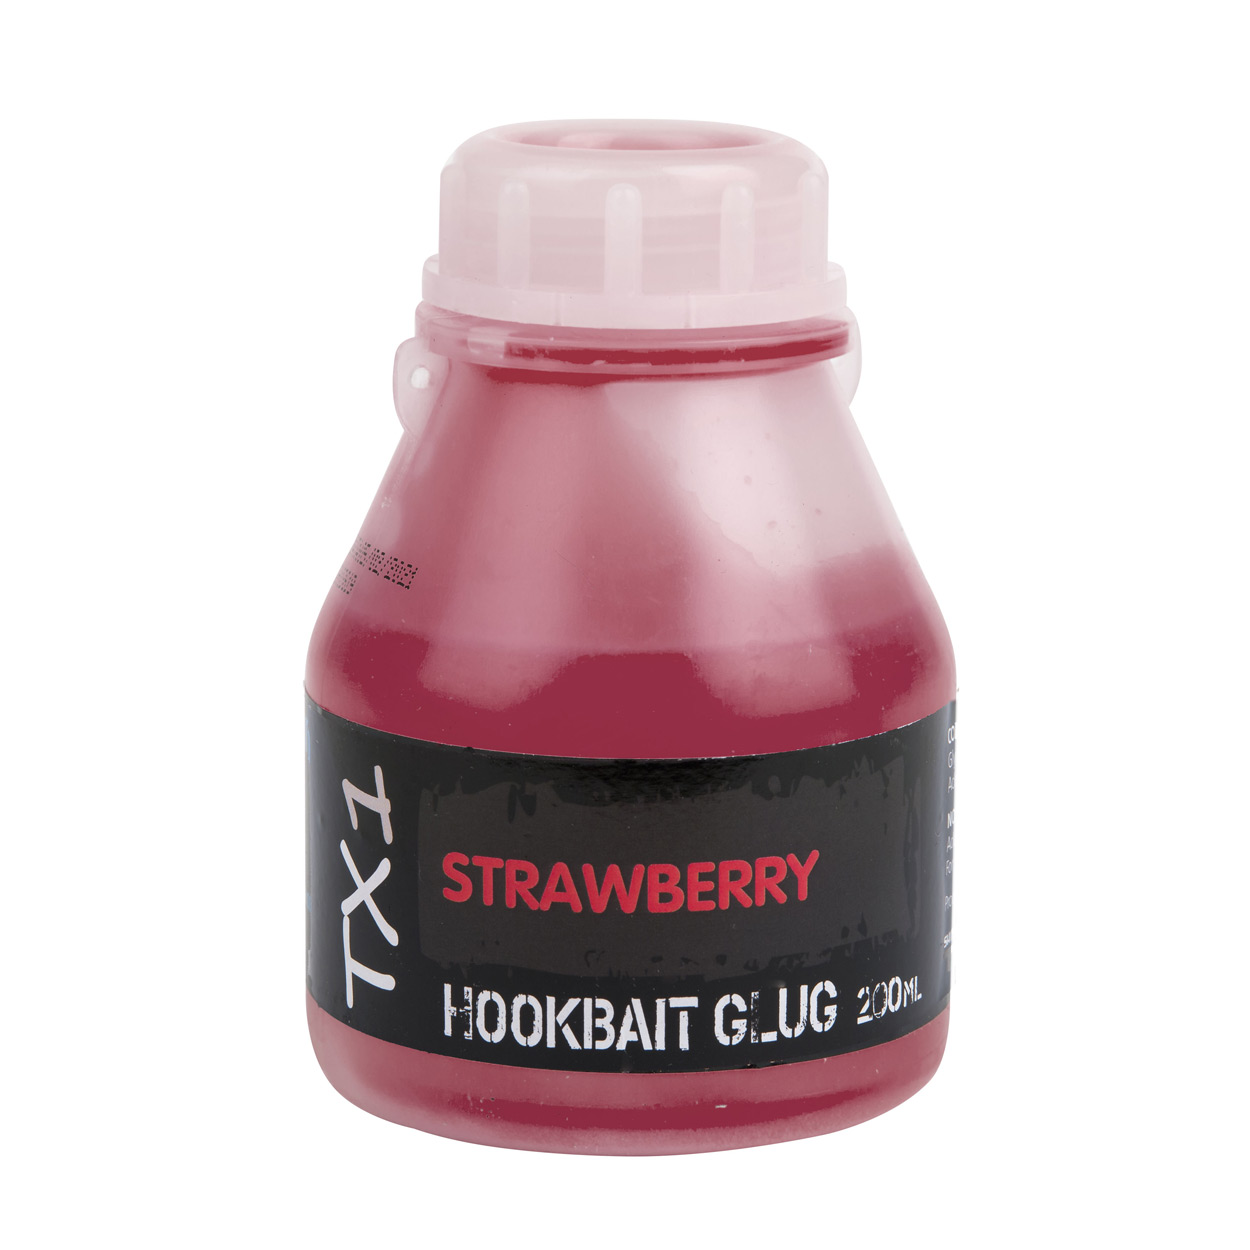 Shimano TX1 Hookbait Dip Glug (200ml) - Strawberry